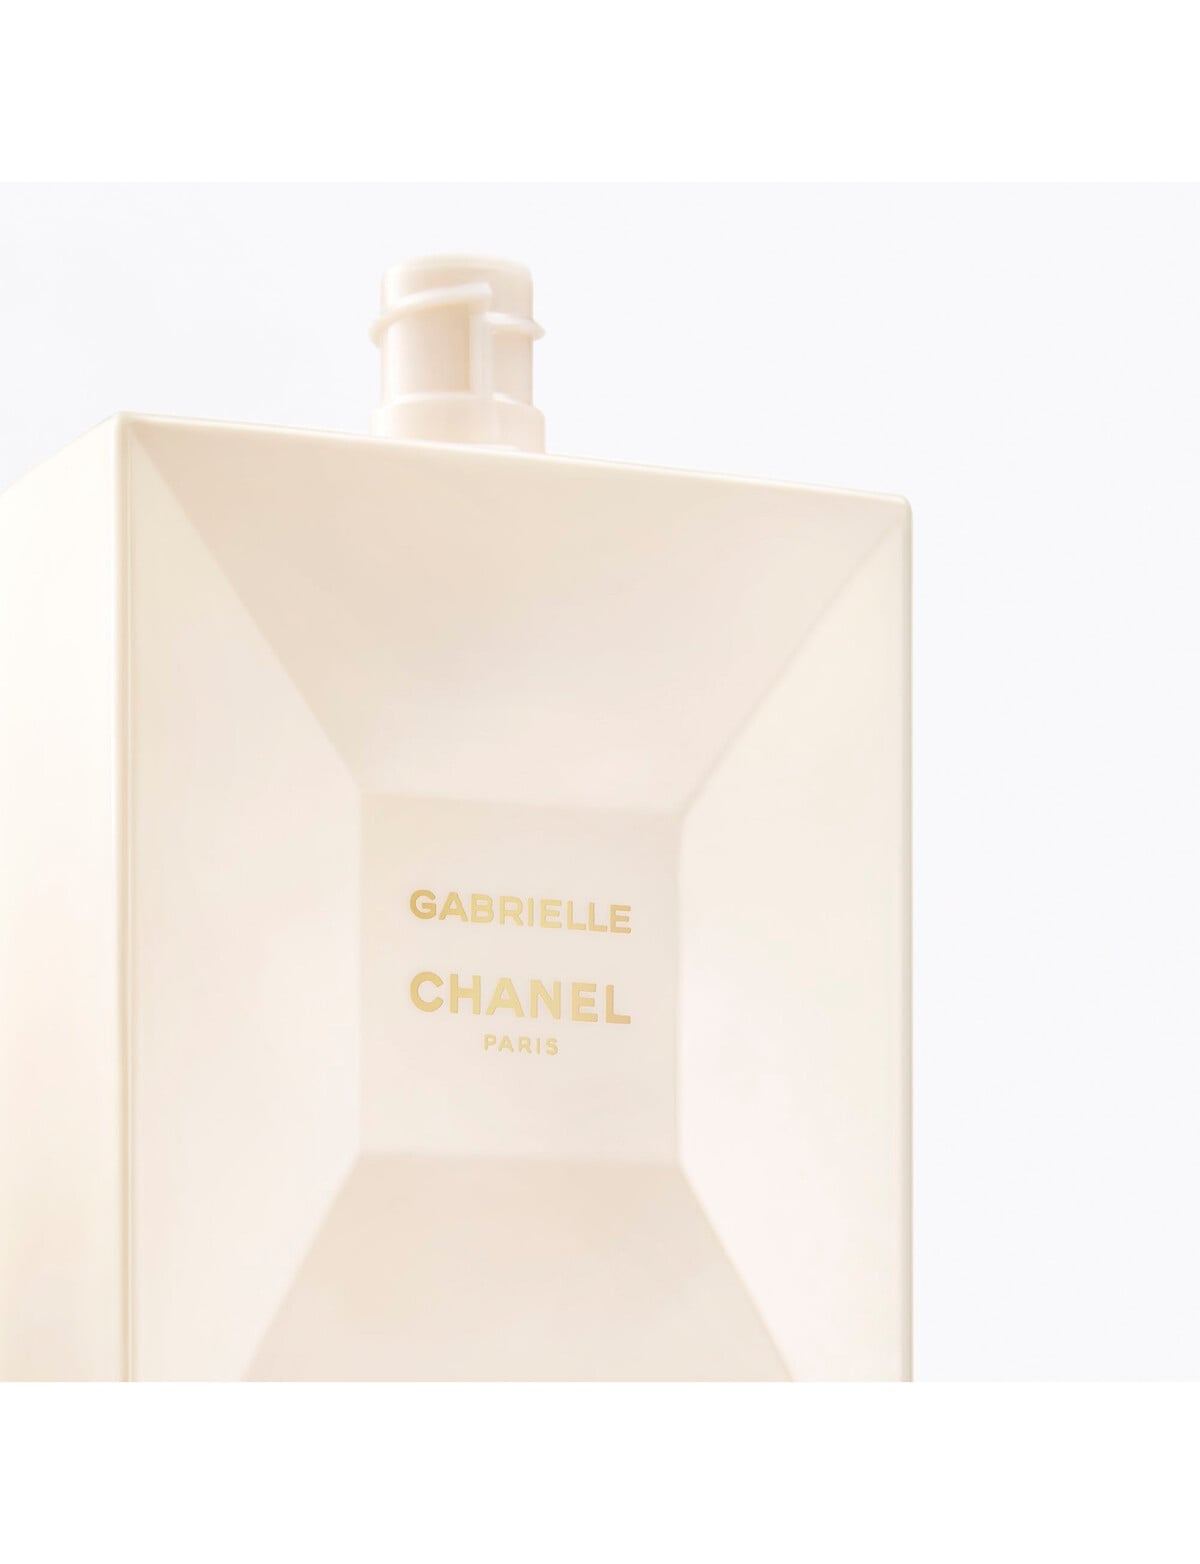 Chanel - COCO NOIR - Foaming Shower Gel - Luxury Fragrances - 200